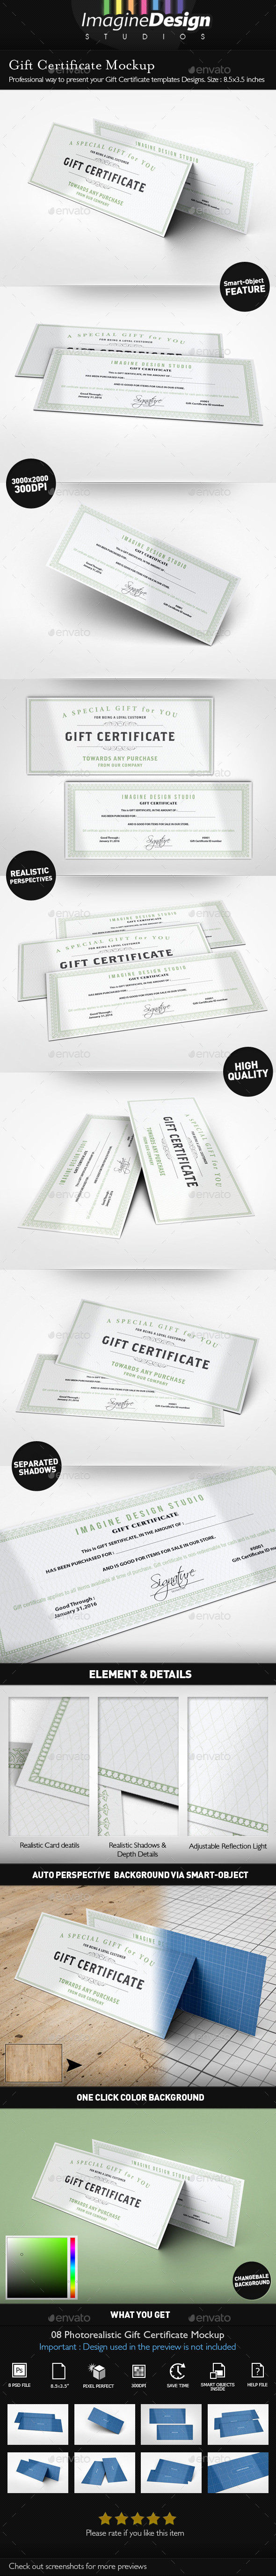 Gift certificate mockup